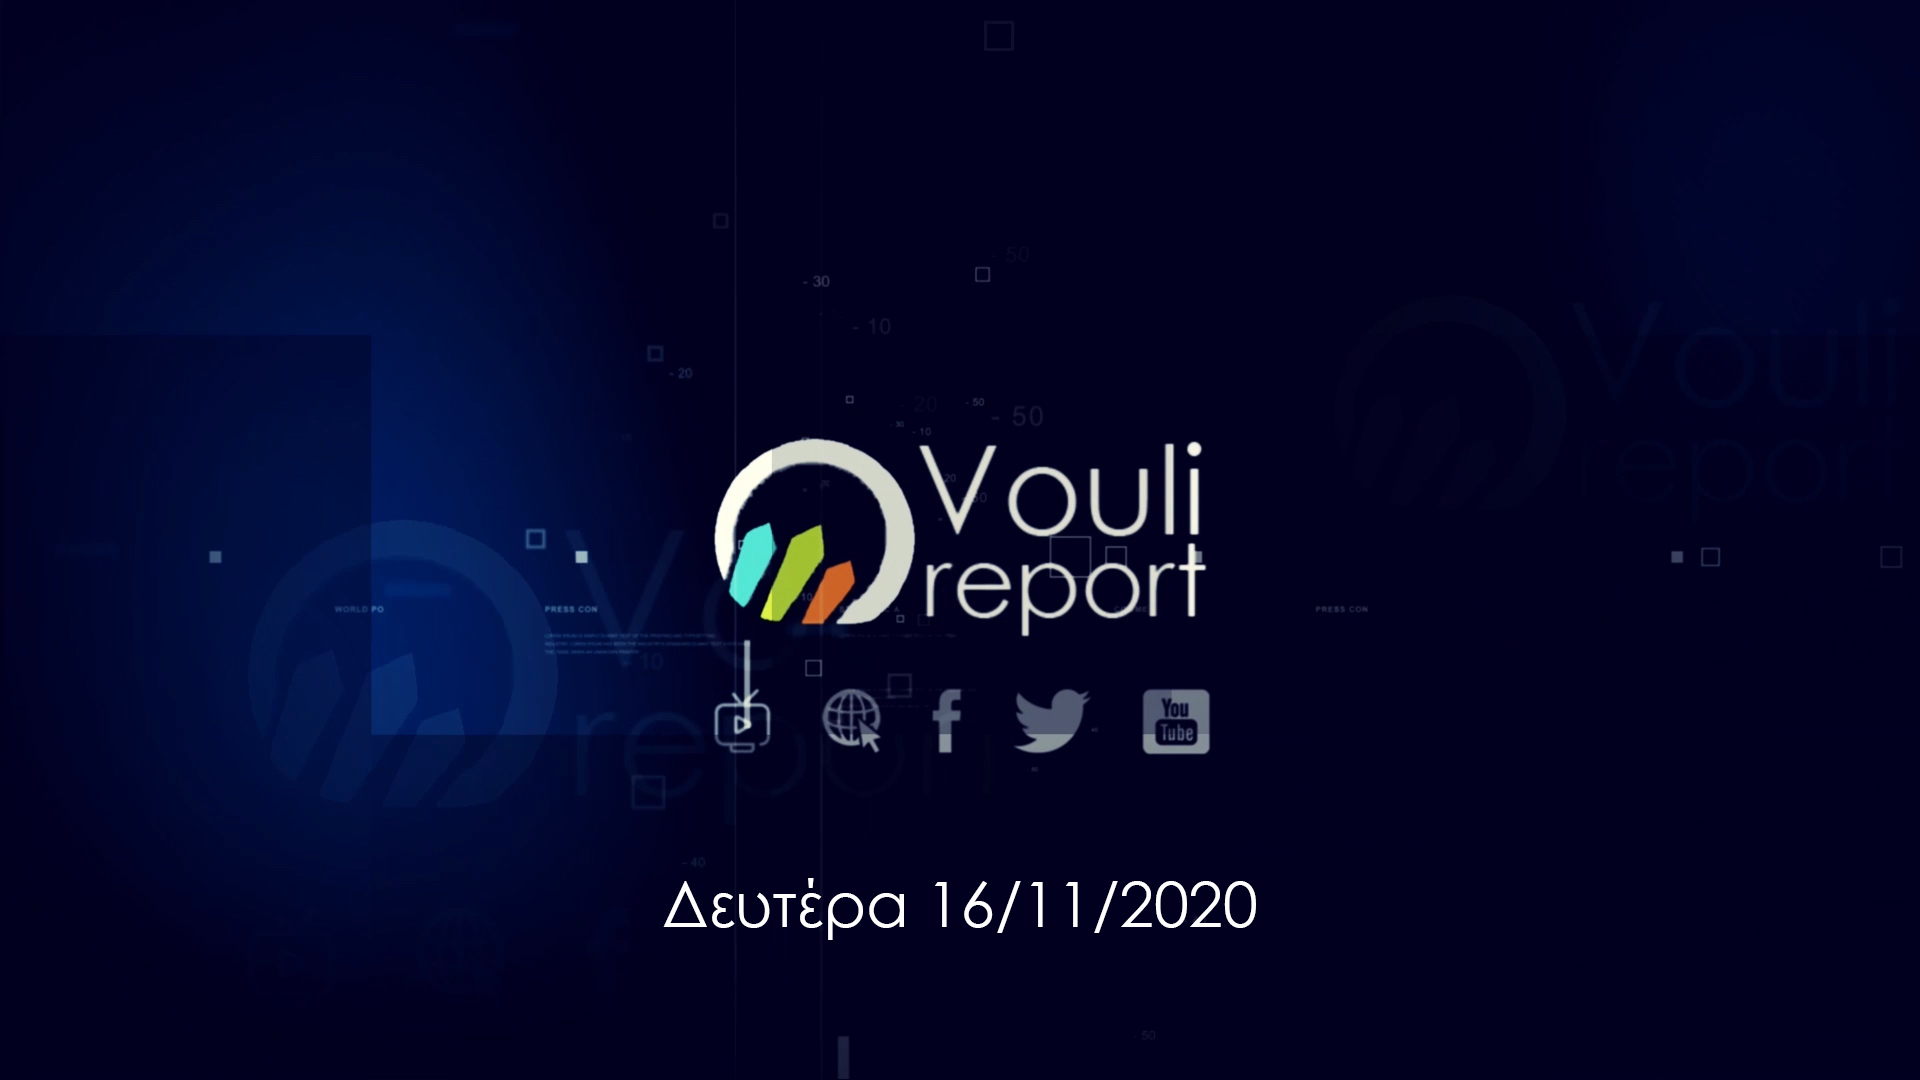 Vouli report | 16/11/2020